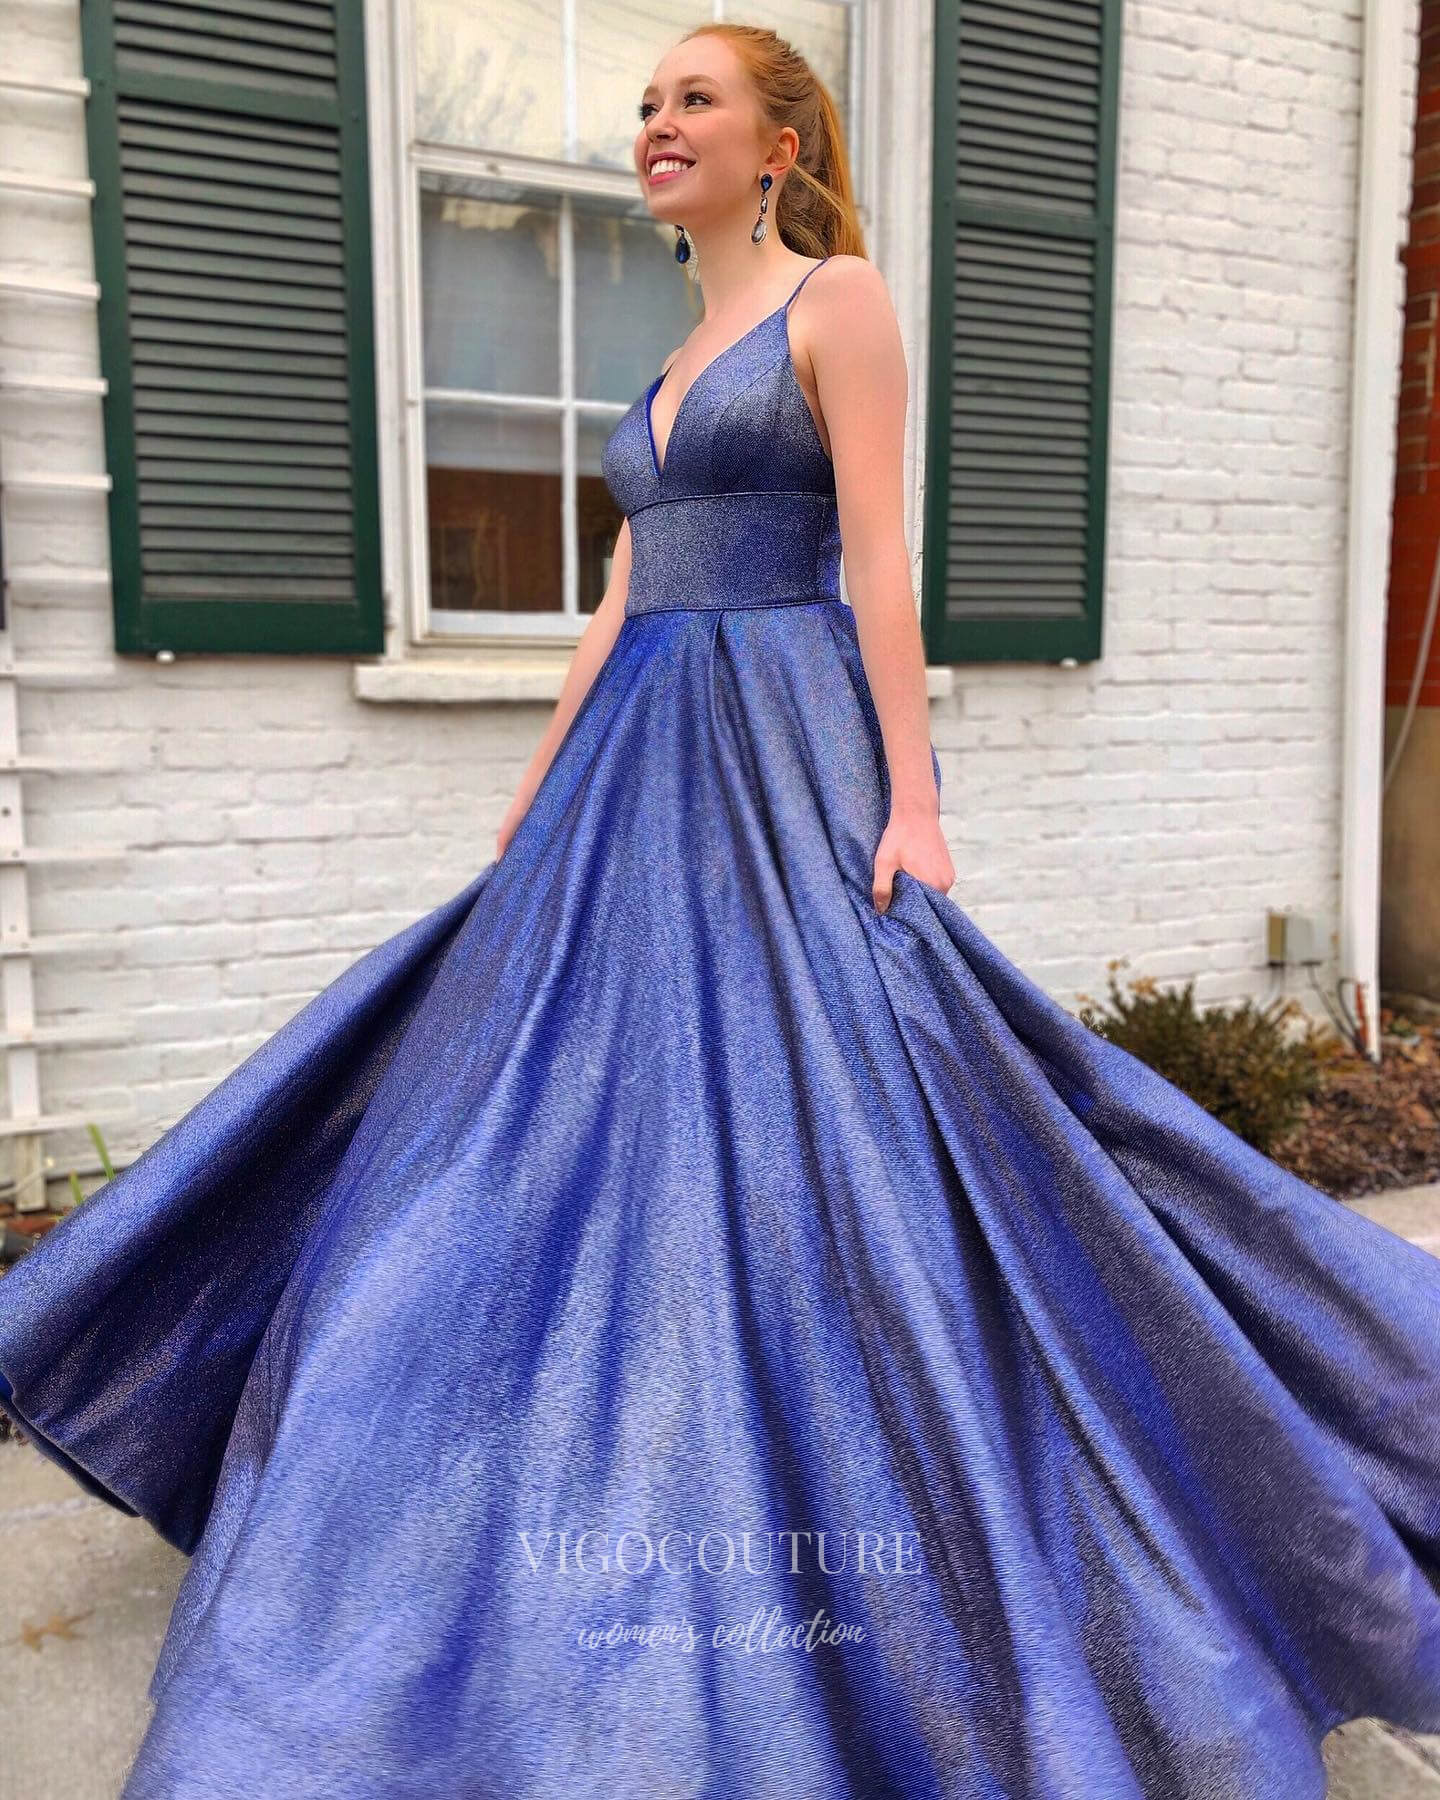 Blue Sparkly Satin Prom Dresses Spaghetti Strap Formal Gown 21886b-Prom Dresses-vigocouture-Blue-US2-vigocouture